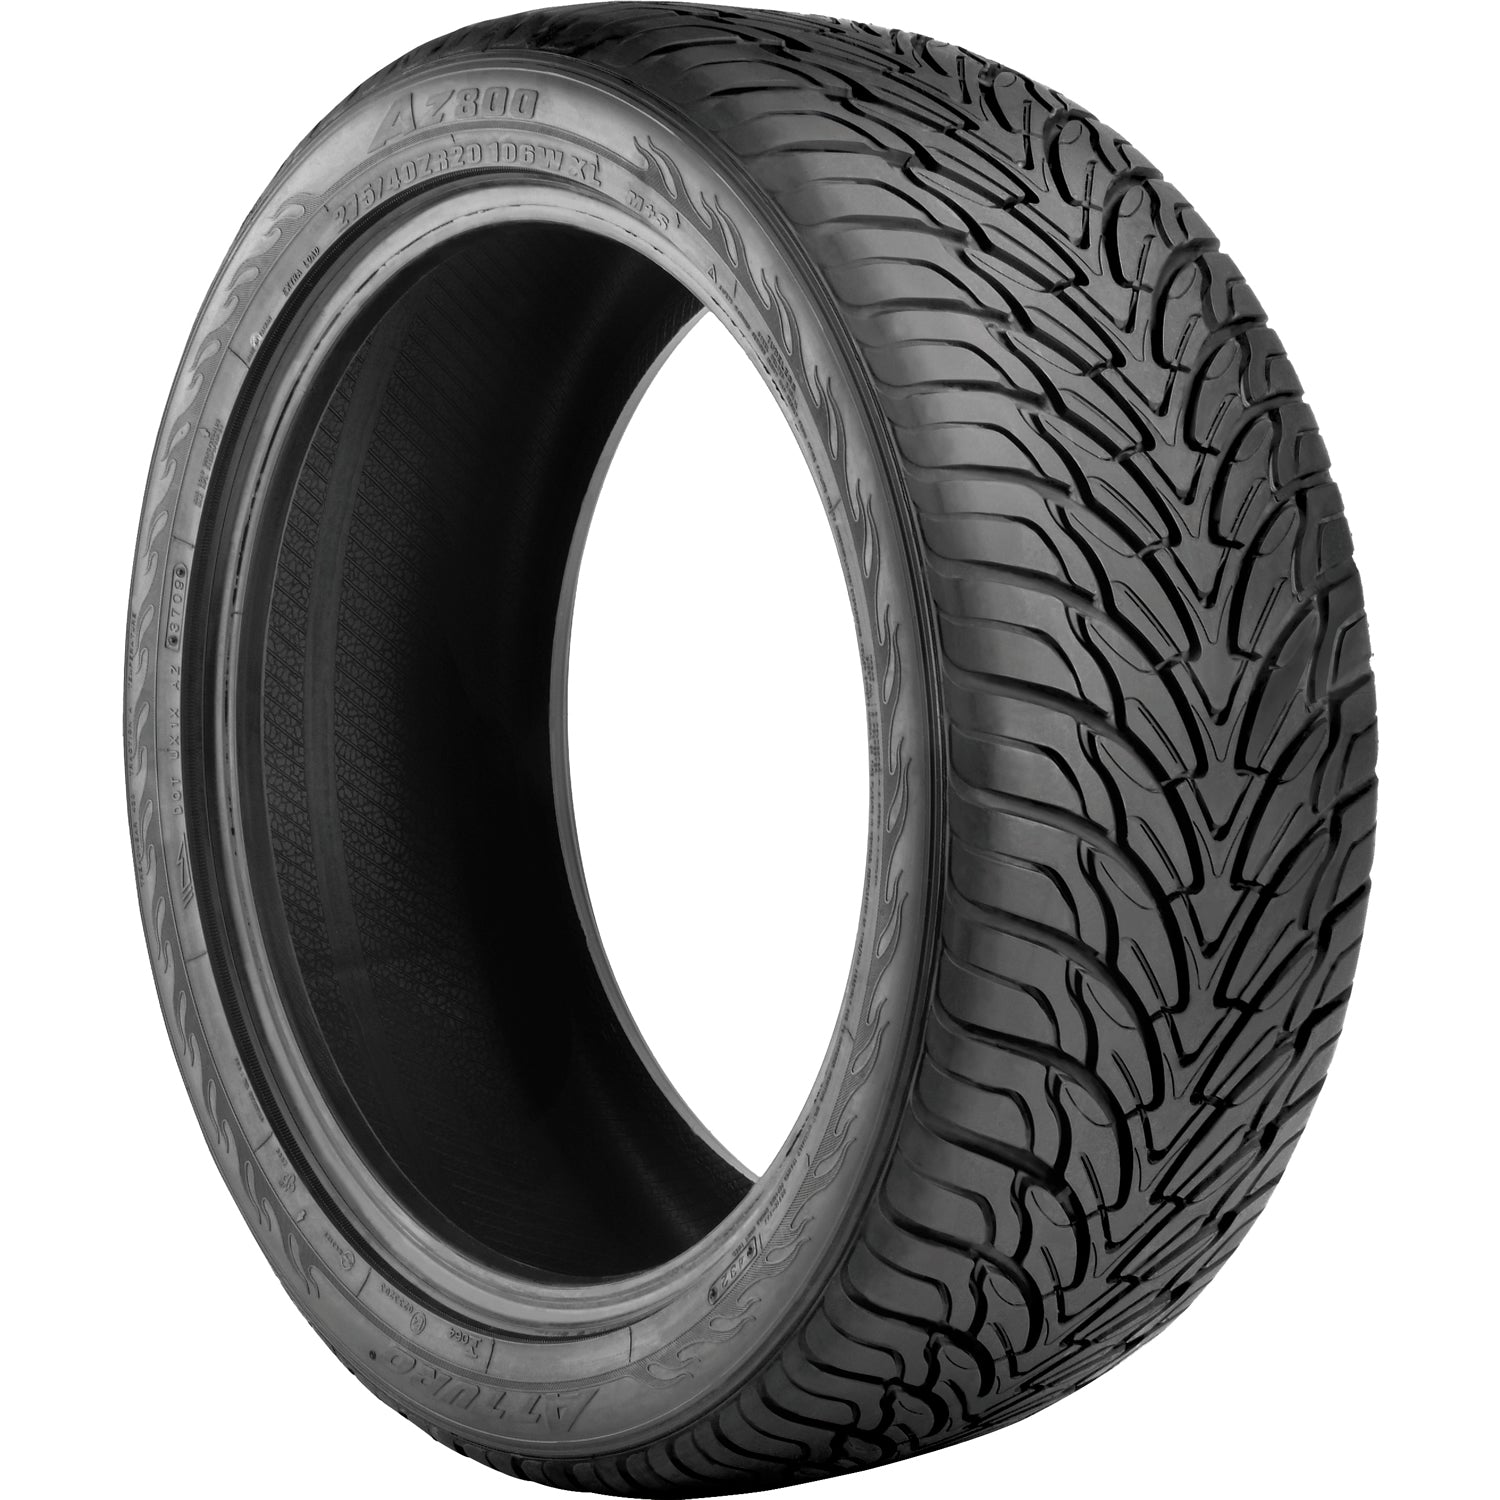 ATTURO AZ800 285/40R24 (33X11.4R 24) Tires